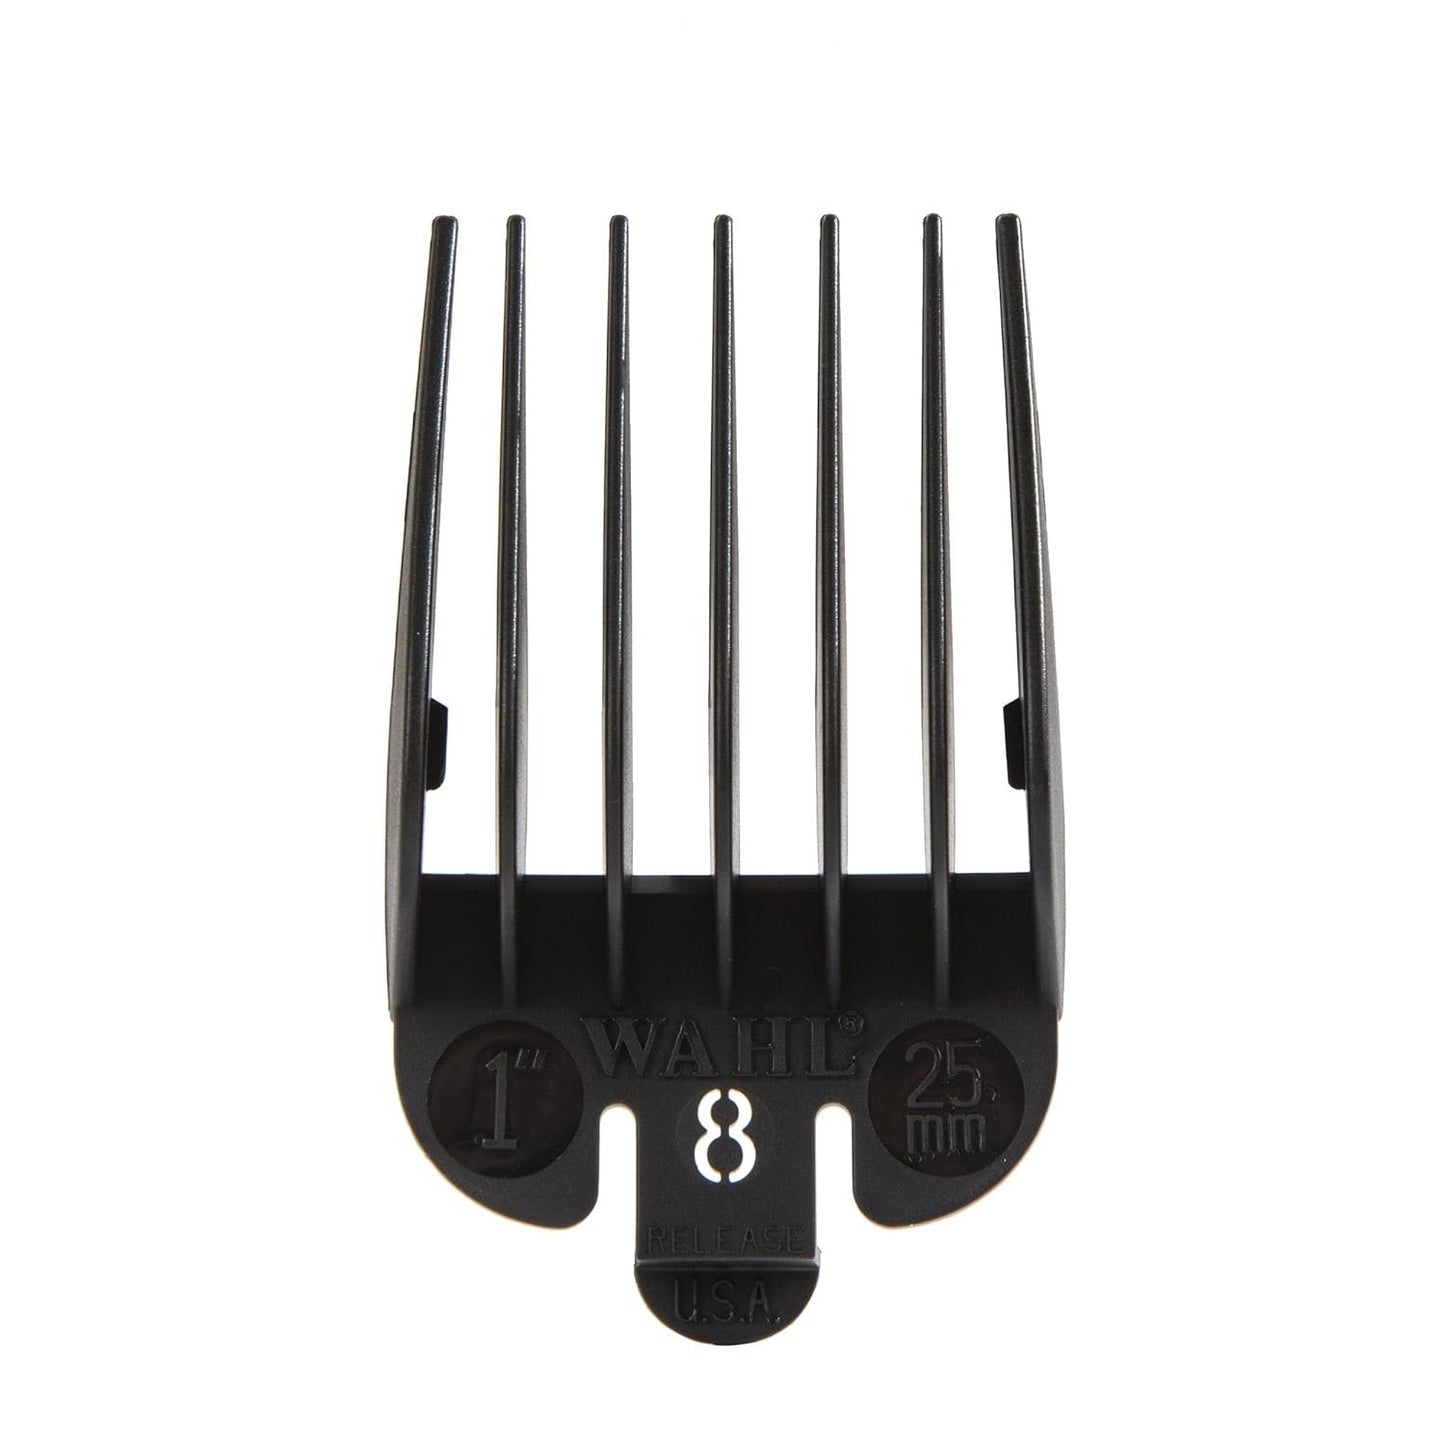 Wahl Professional #8 3150-001 Guide Comb Attachment 1"